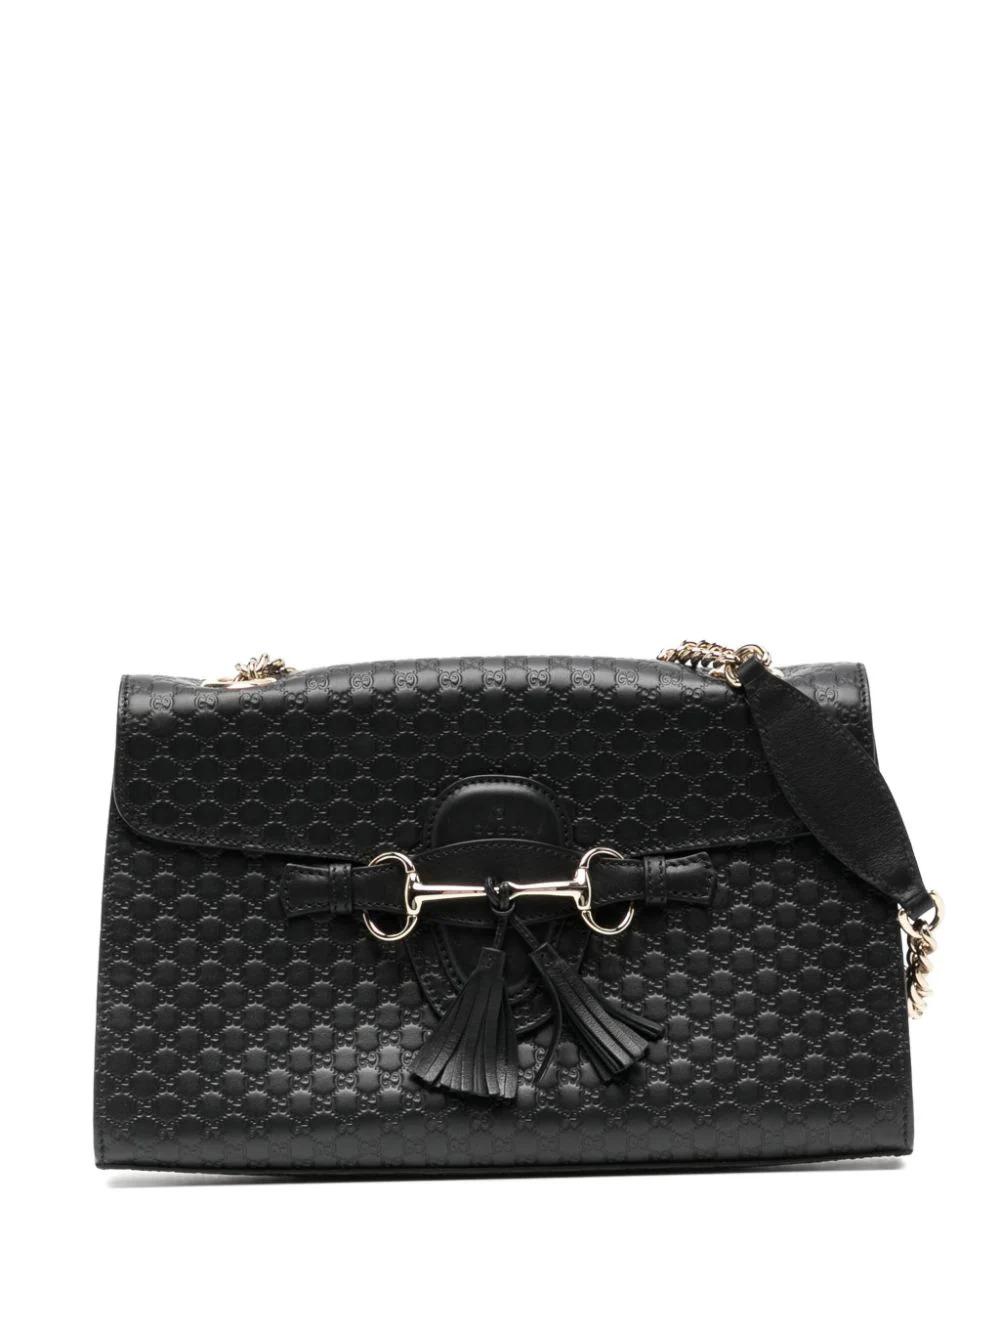 Gucci Guccissima horsebit-detail shoulder bag For Sale 1